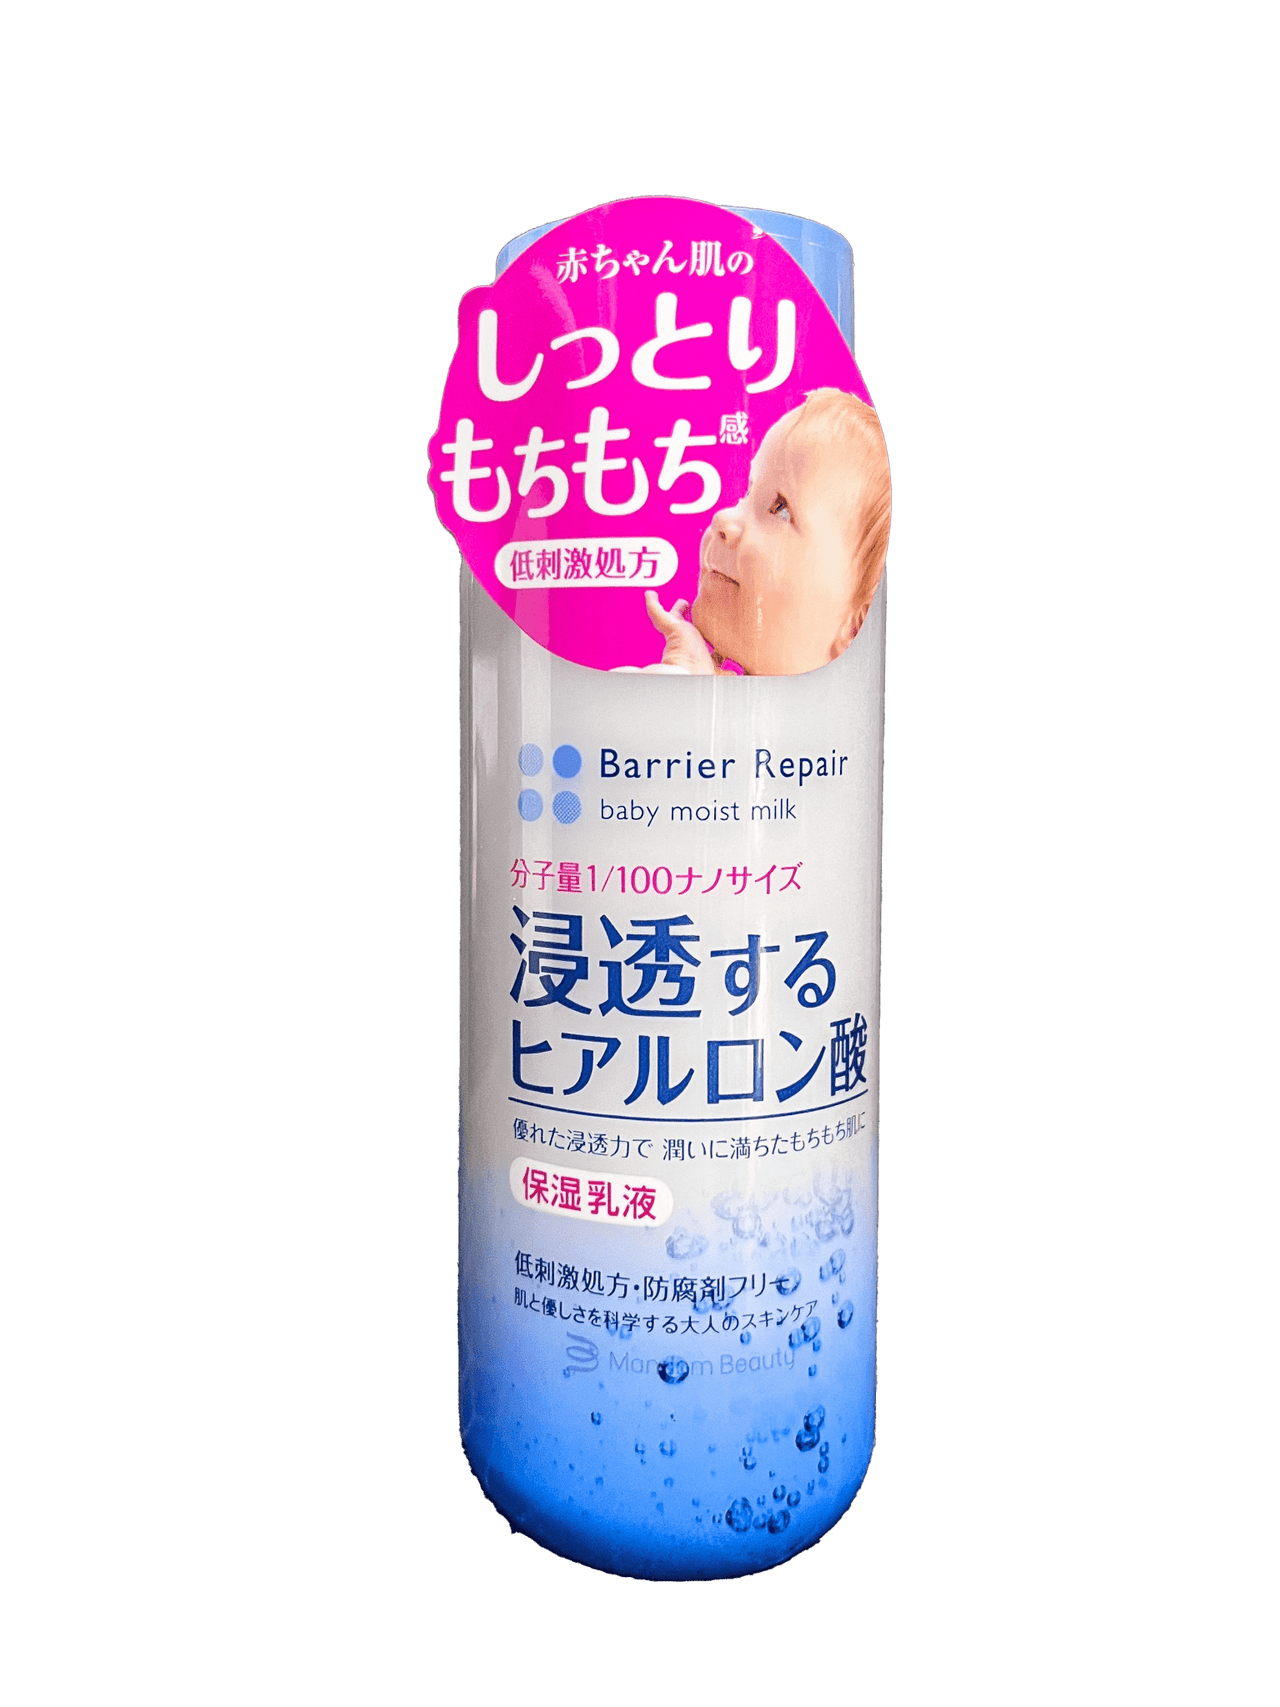 MANDOM BEAUTY_Barrier Repair baby moist milk_Cosmetic World